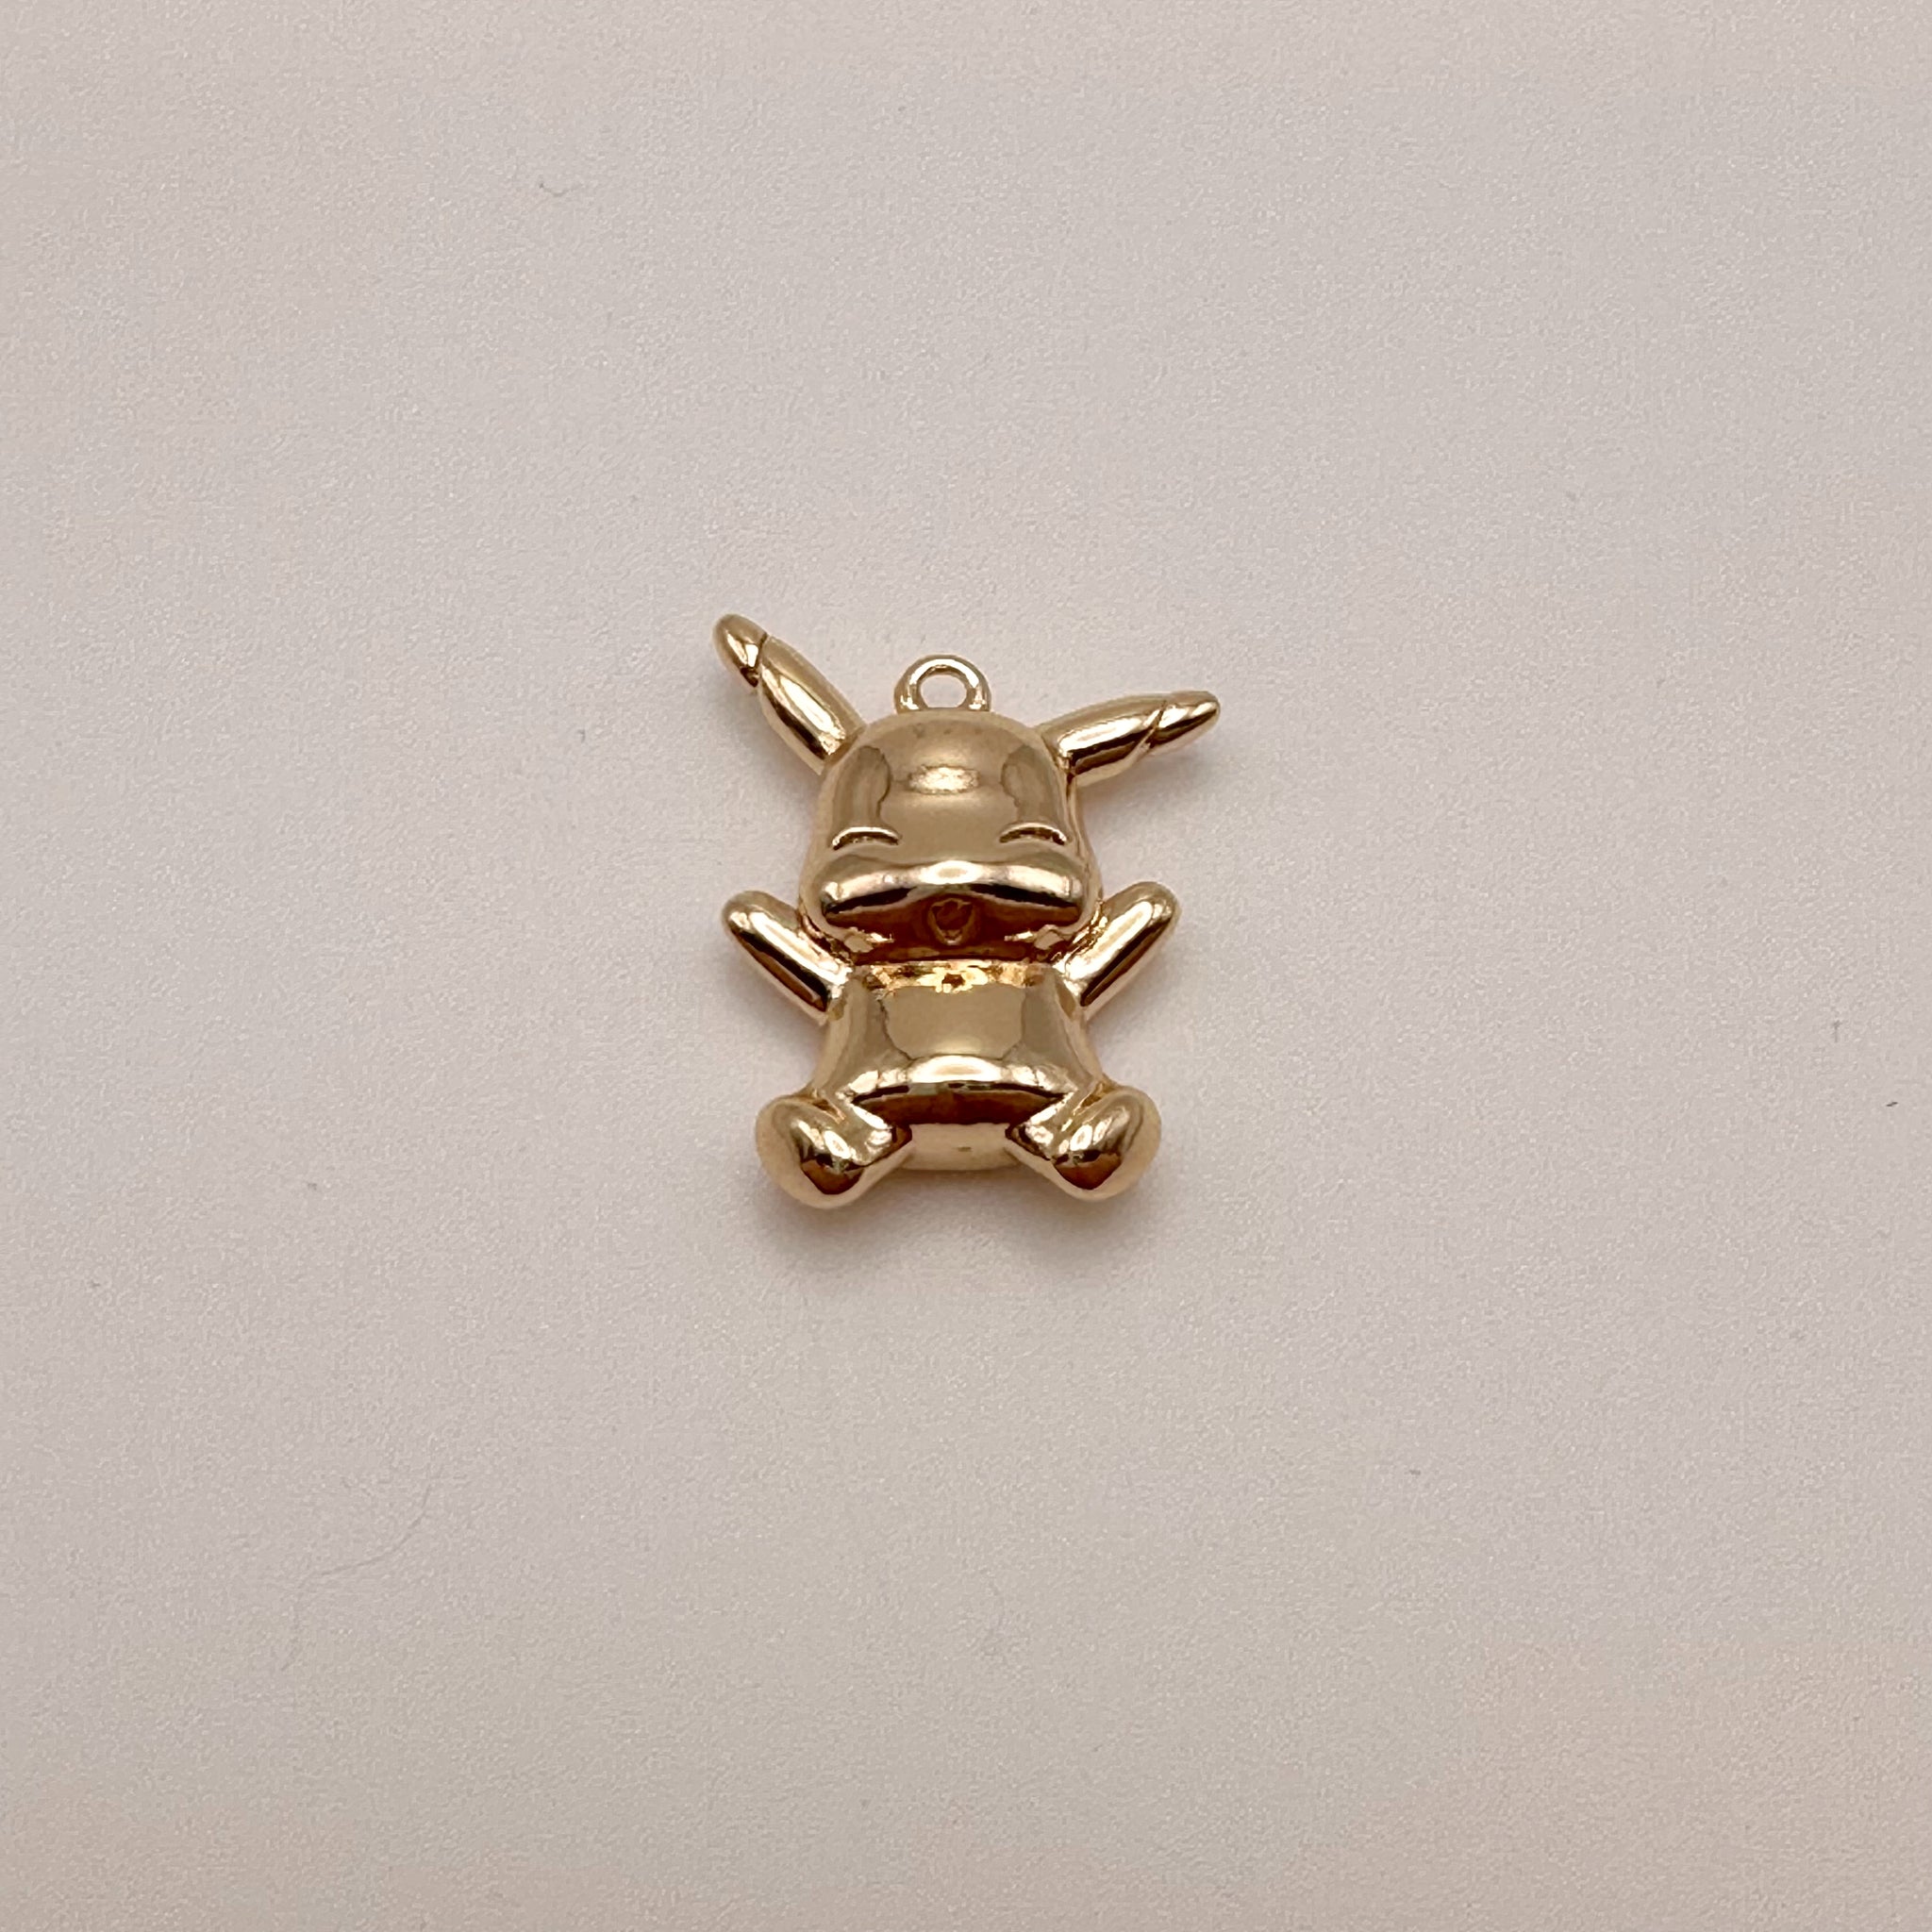 Pikachu Charm